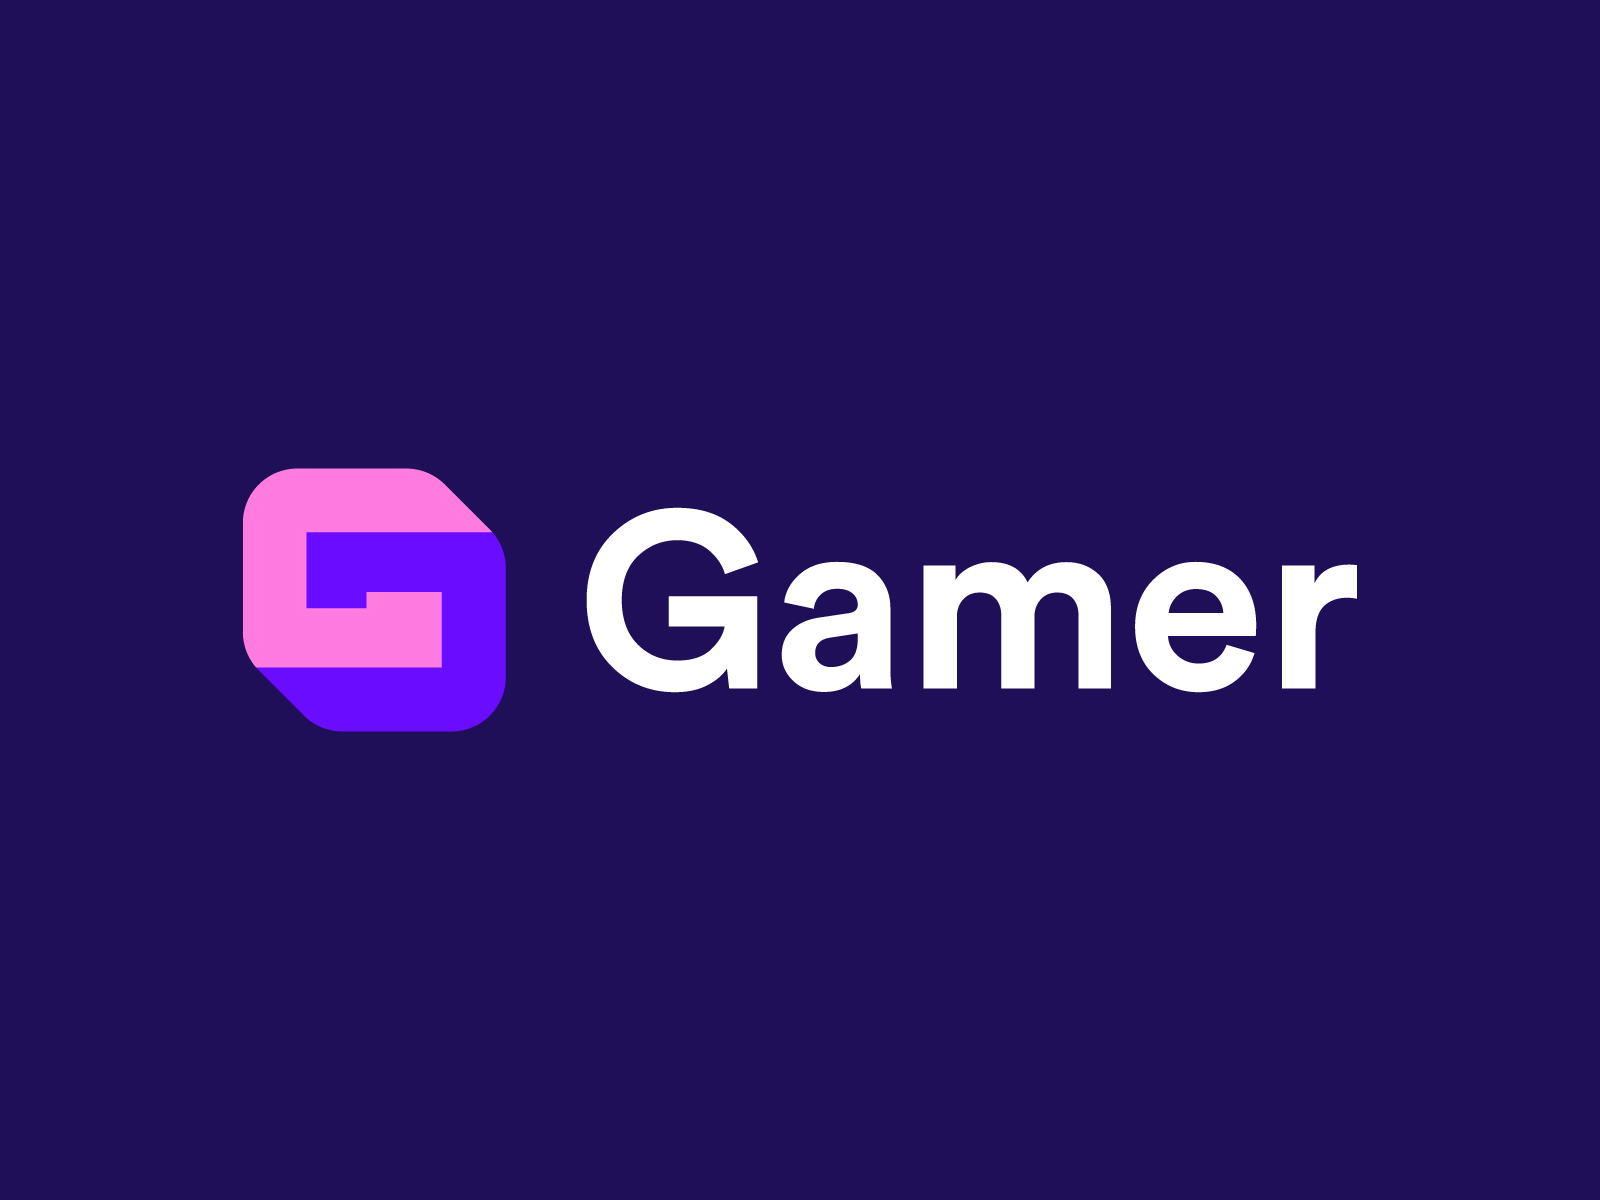 Gamer logo G by Muhammad Aslam on Dribbble